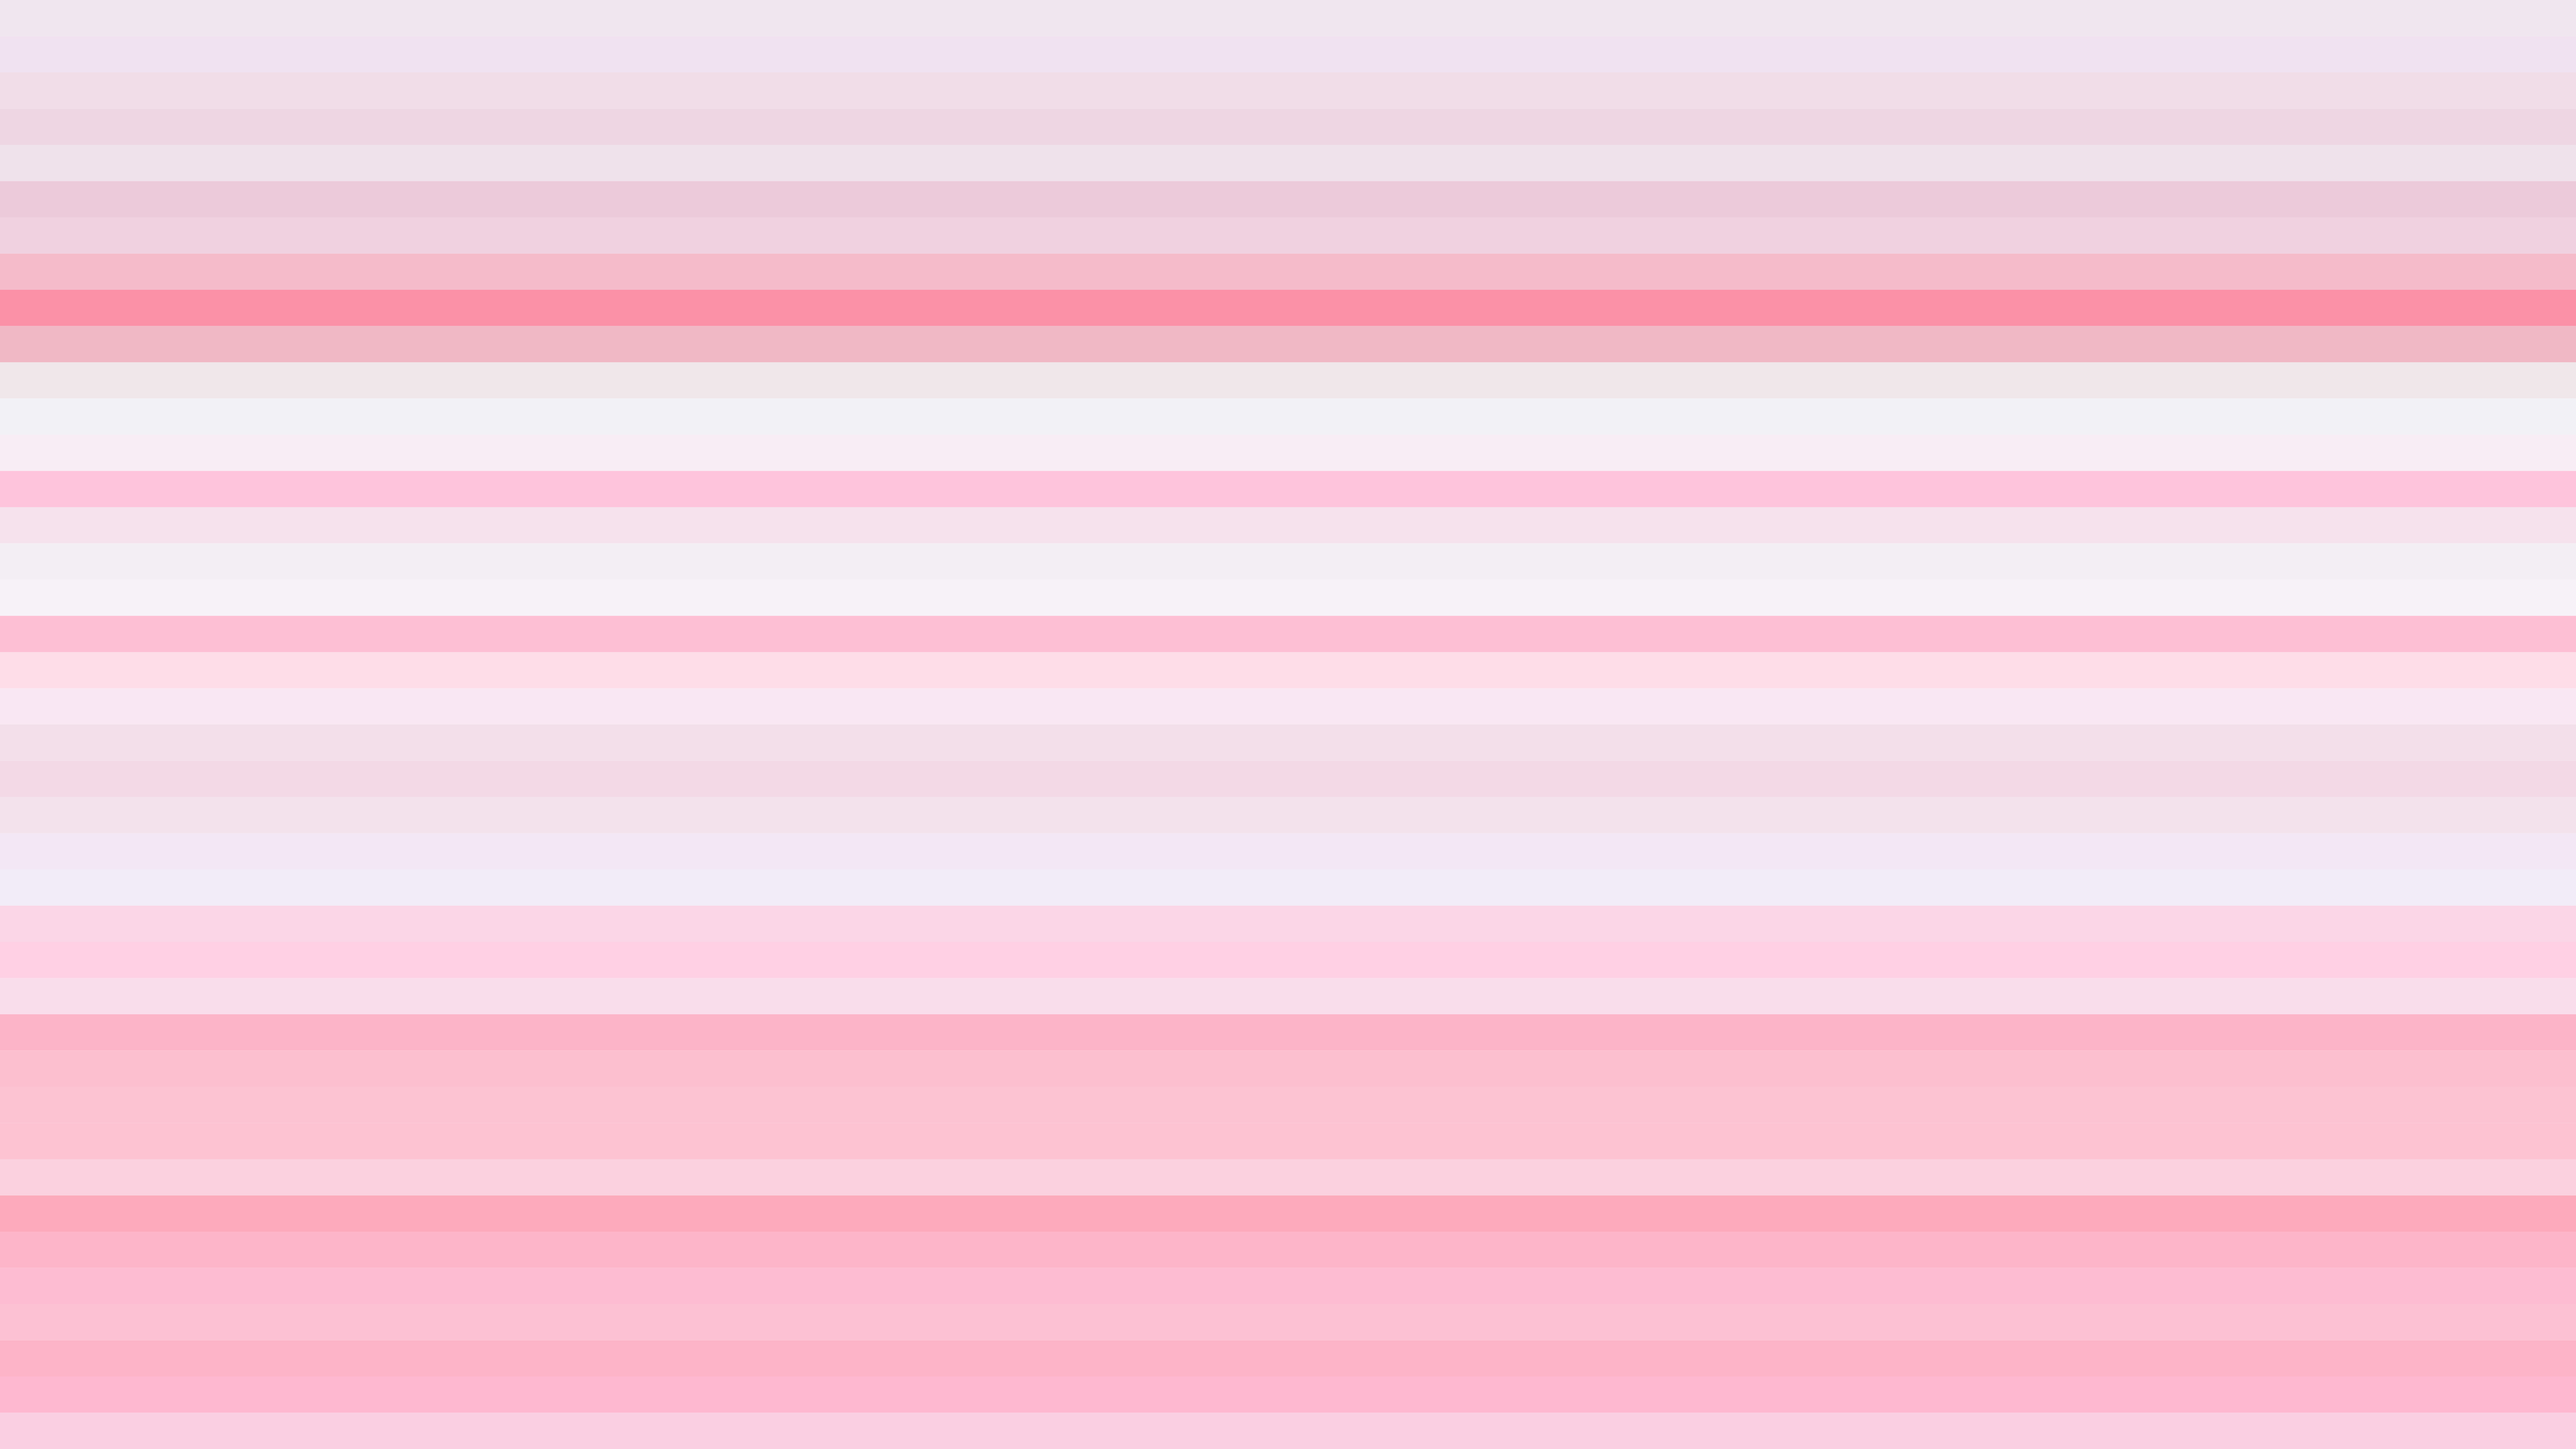 Pink And White Horizontal Stripes Background Illustrator